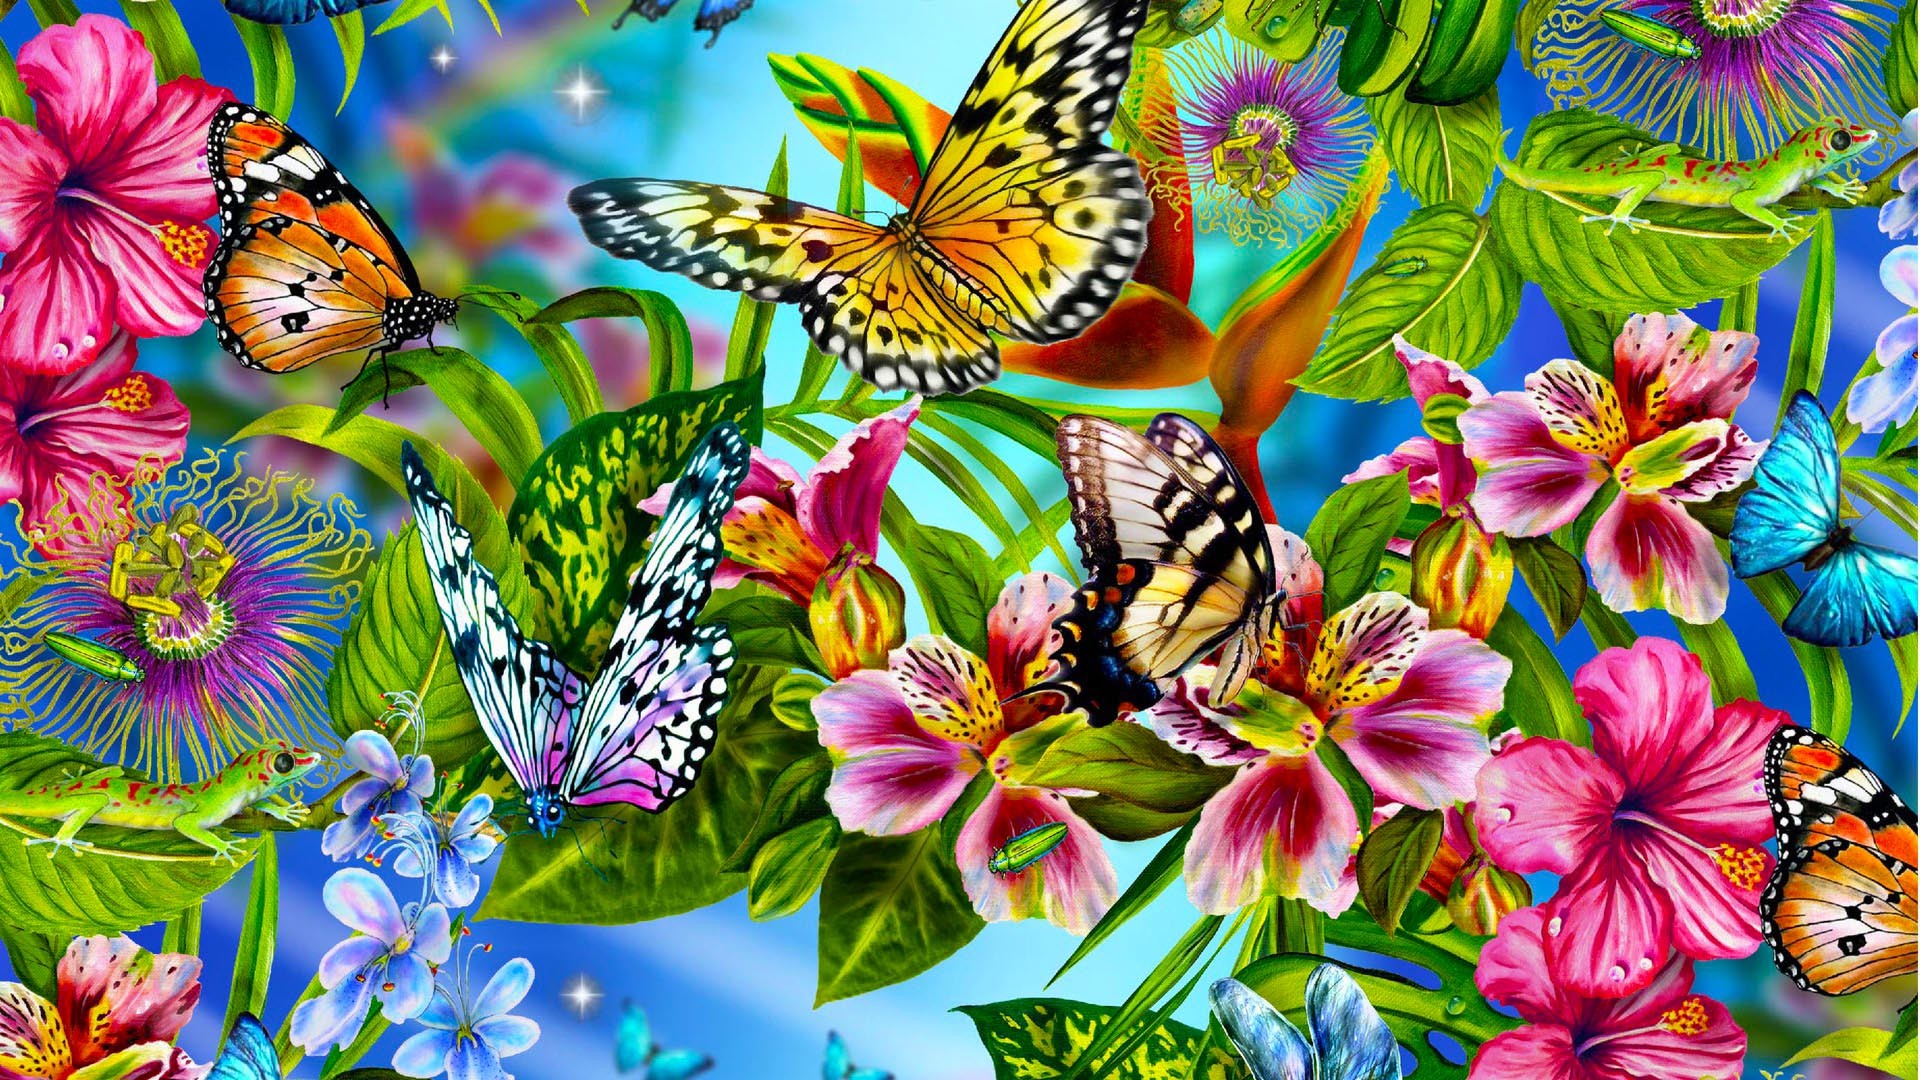 1920x1080 ... Funky Wallpapers - 4USkY.com buterlies | Dreama: Butterflies | Ideas  for the House | Pinterest .